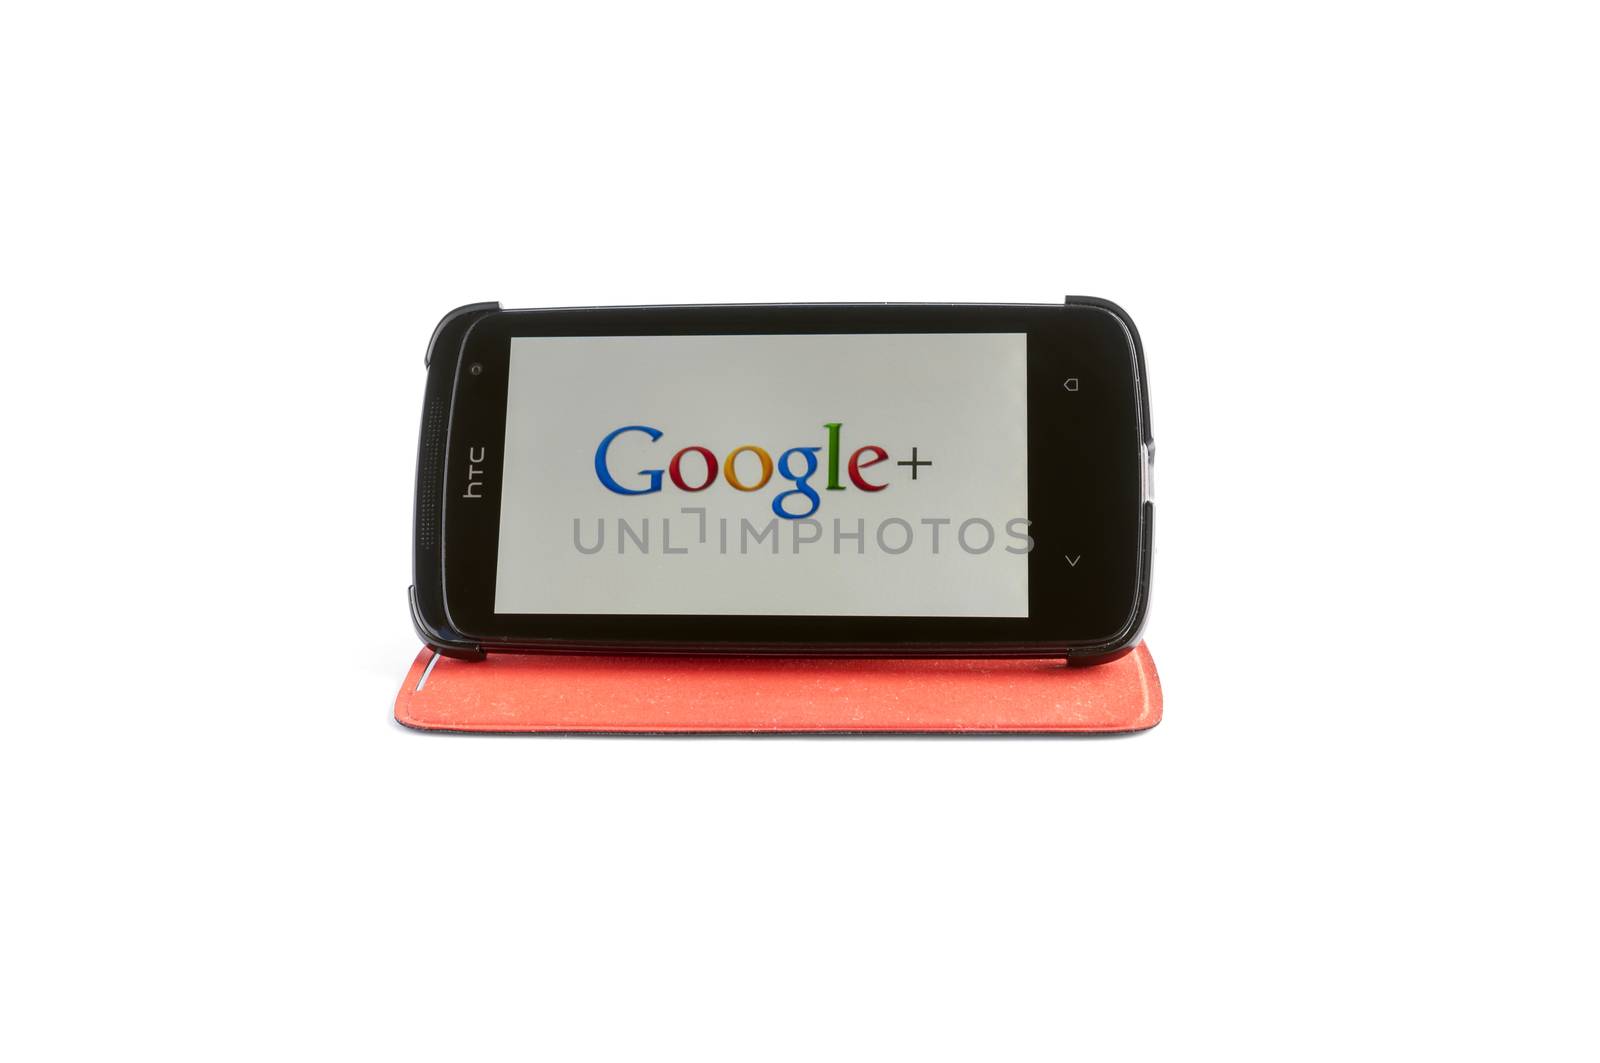 Photo of Google+ on smartphone screen by maxmitzu